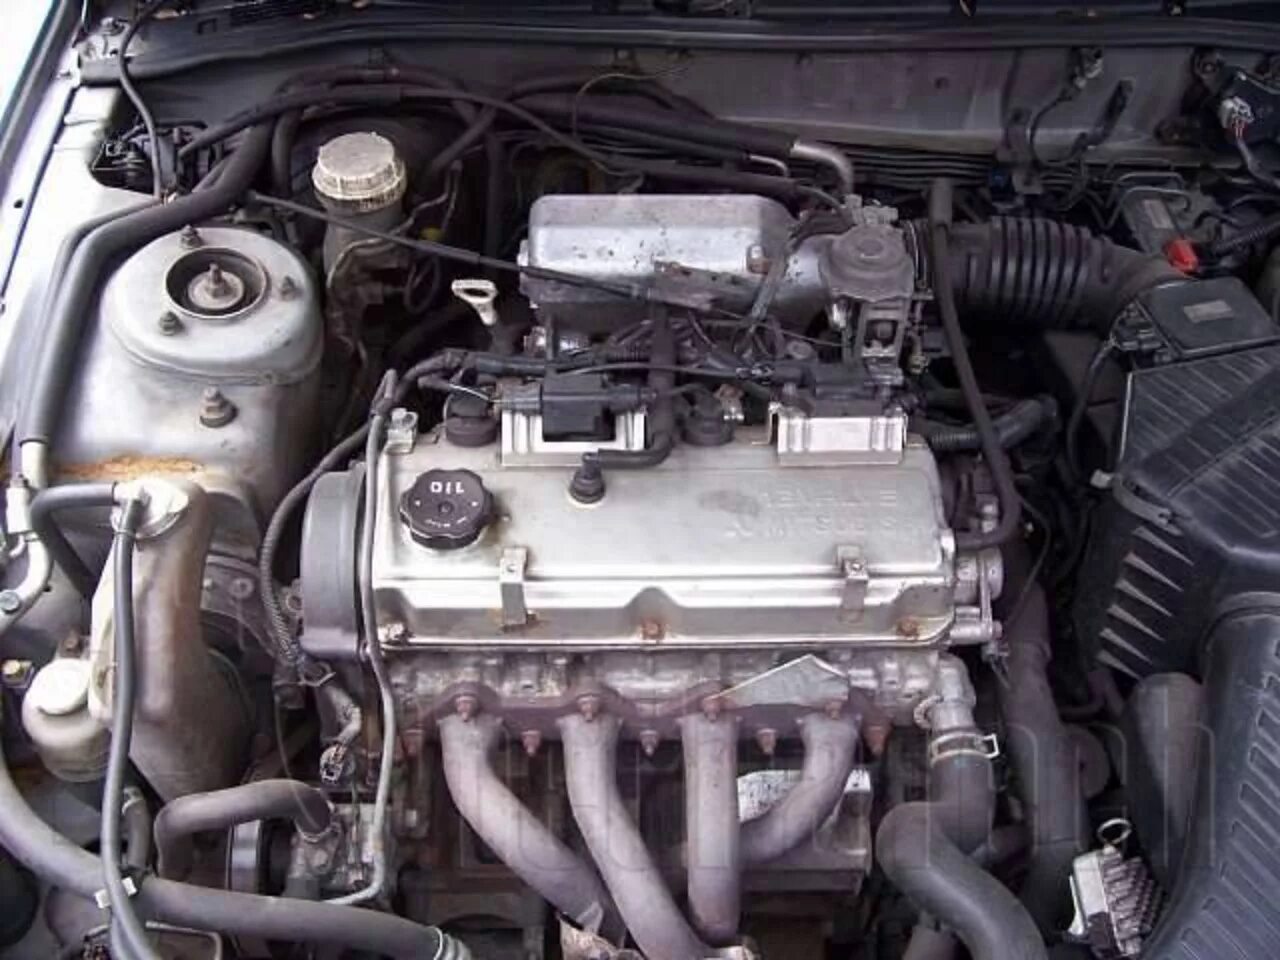 Mitsubishi carisma двигатели. Мотор Mitsubishi Galant g 4 63. Двигатель 4g63 Mitsubishi Galant. Мотор 2.4 Митсубиси Галант. Митсубиси Галант 8 2.4 мотор.